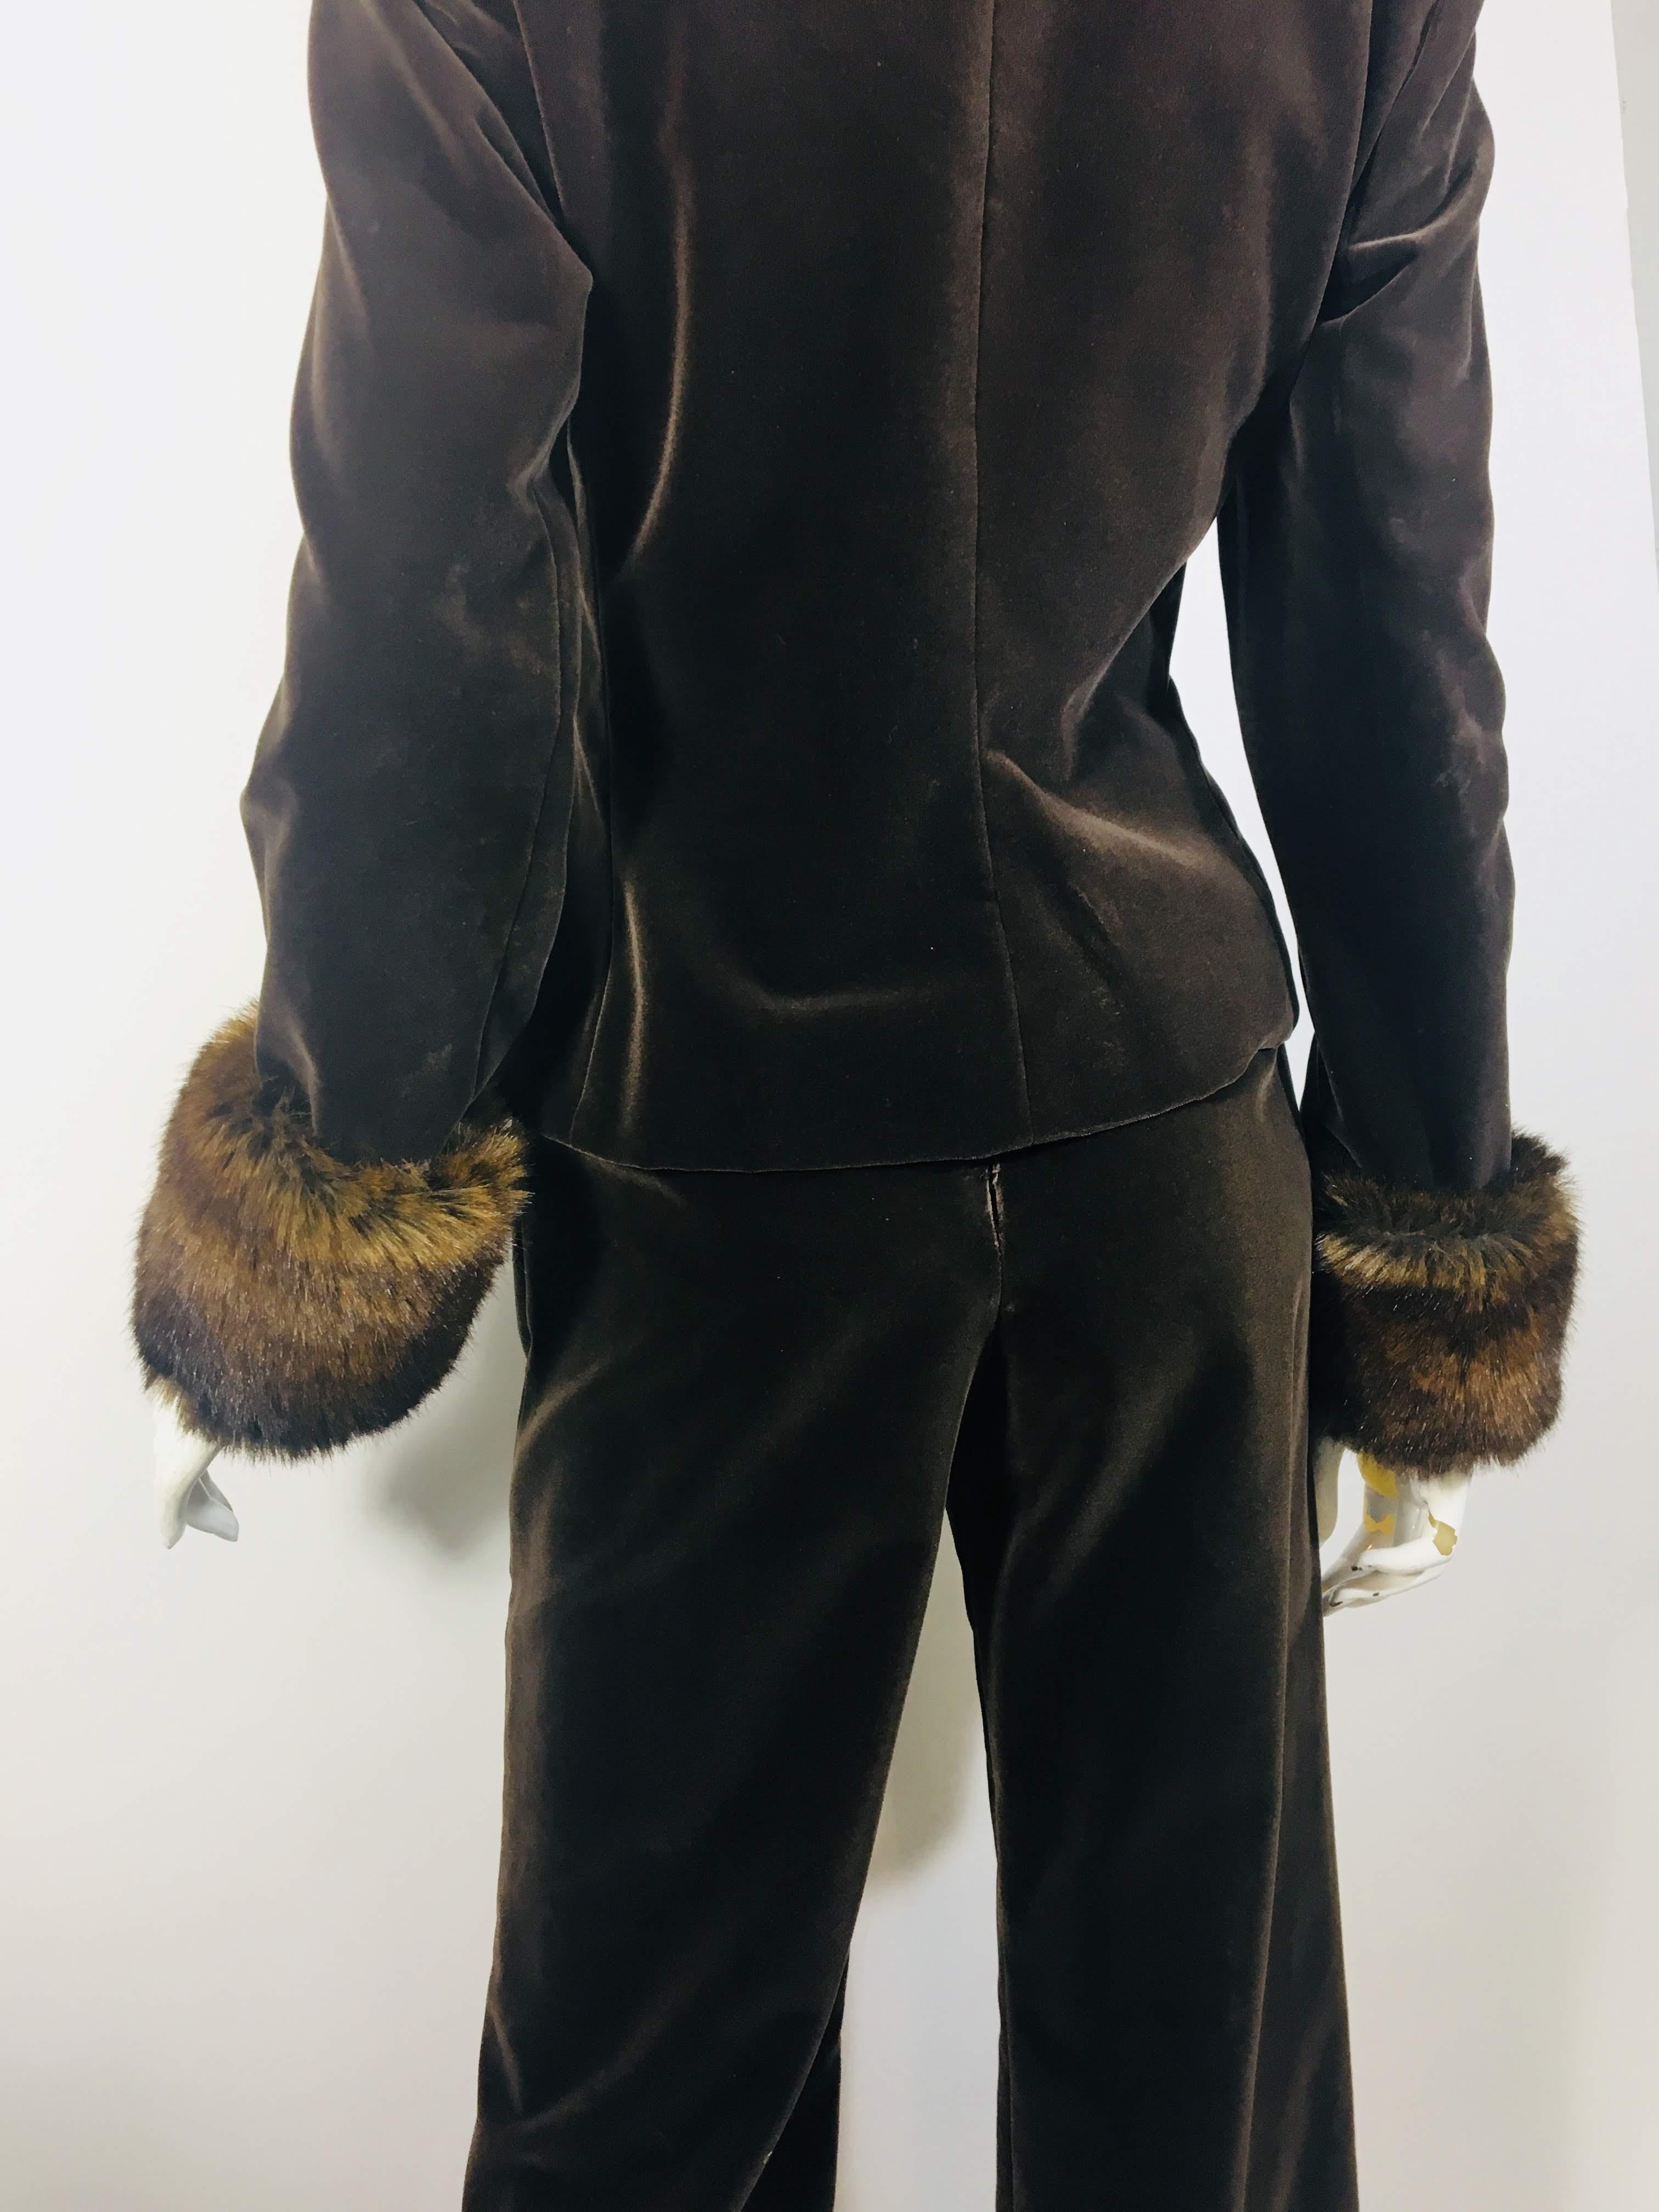 Carolina Herrera Pant Suit with Fur Trim 5